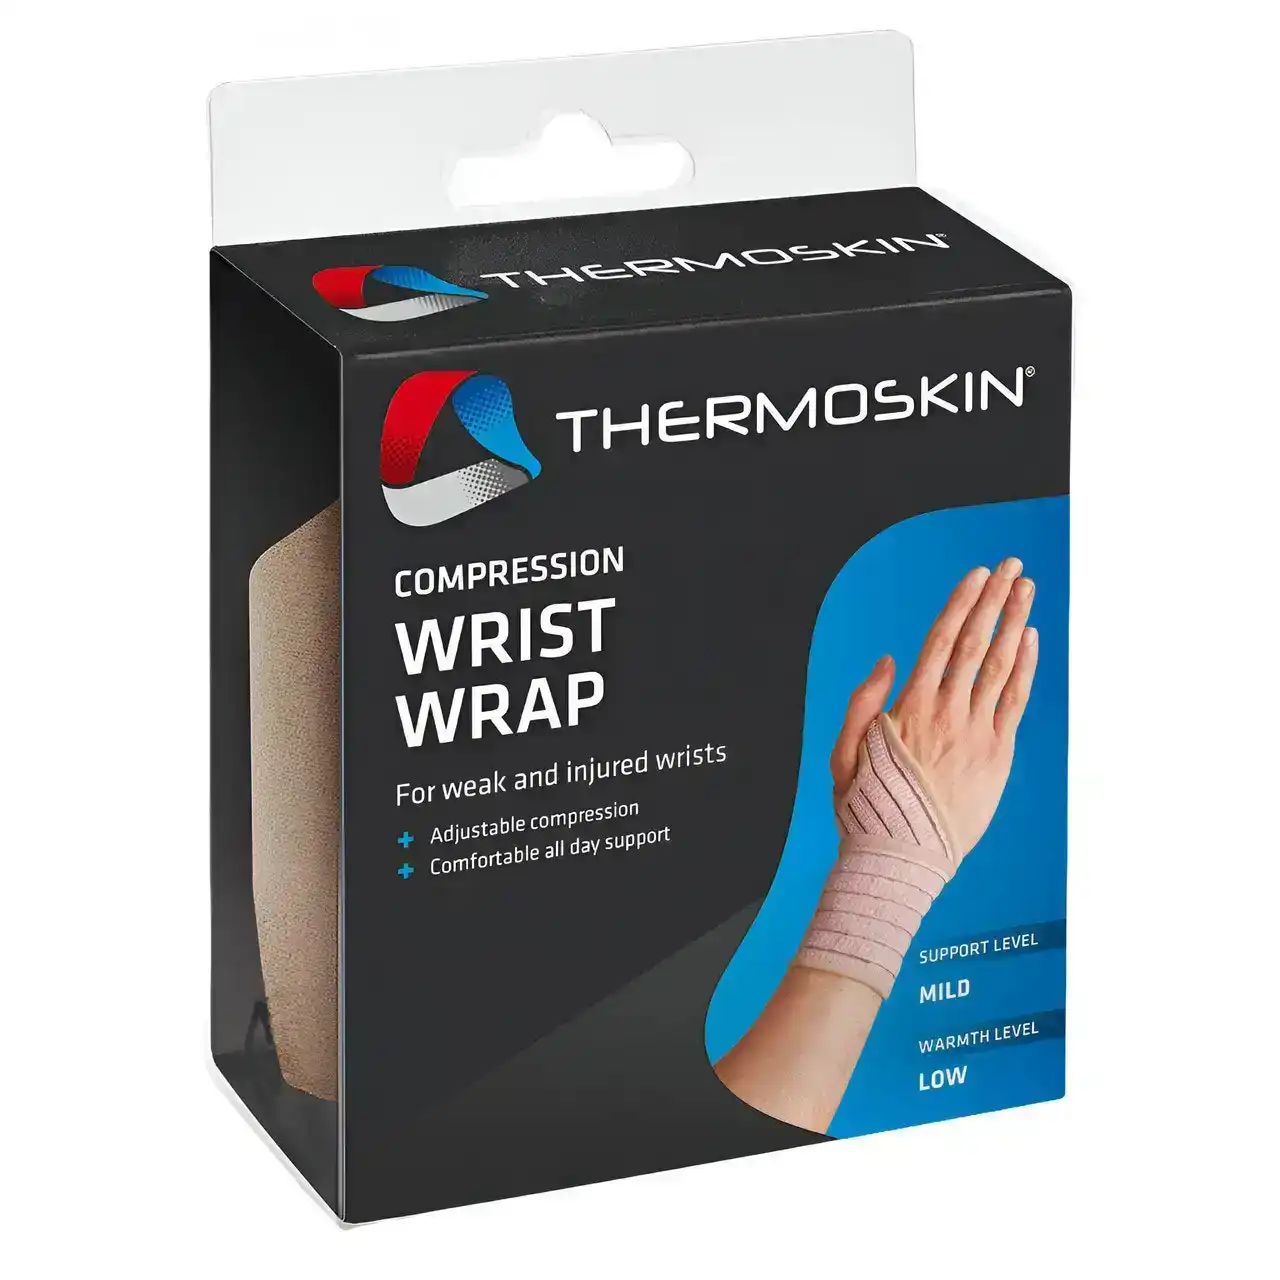 Thermoskin Compression Wrist Wrap